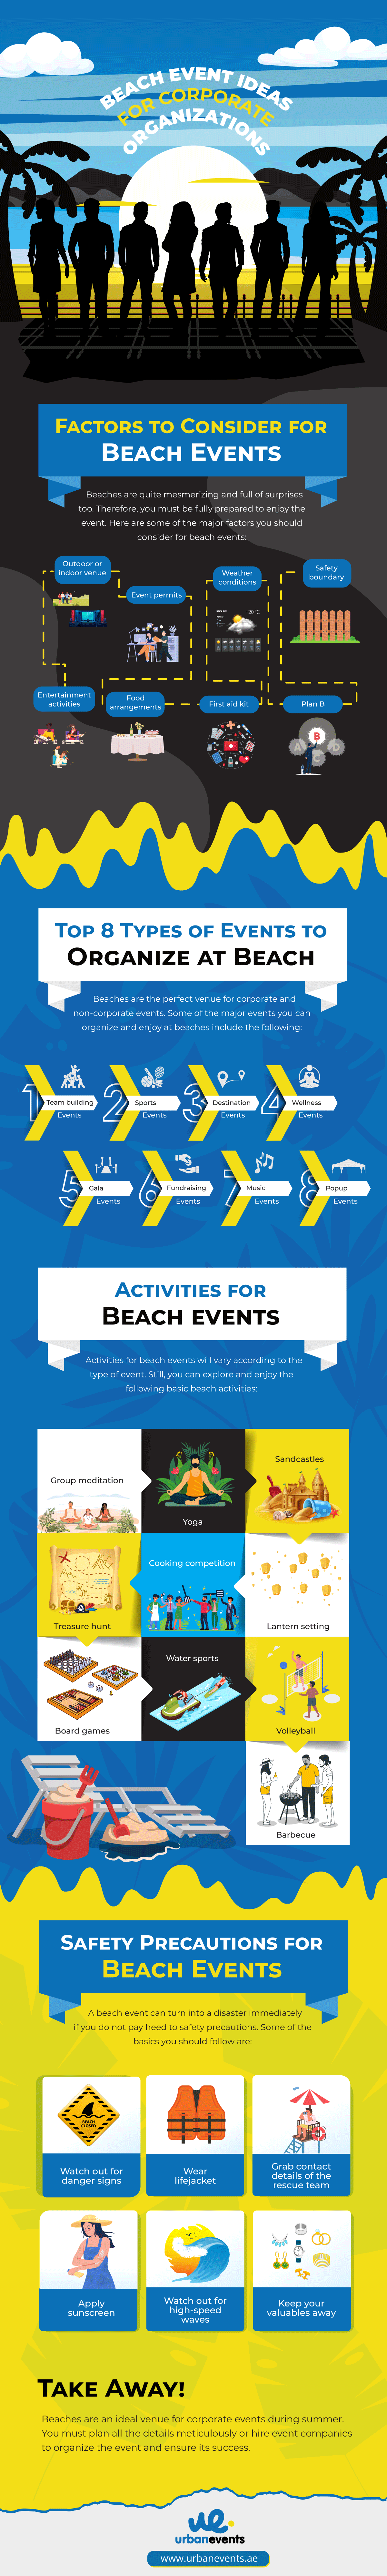 Beach Event Ideas for Corporate Organizations